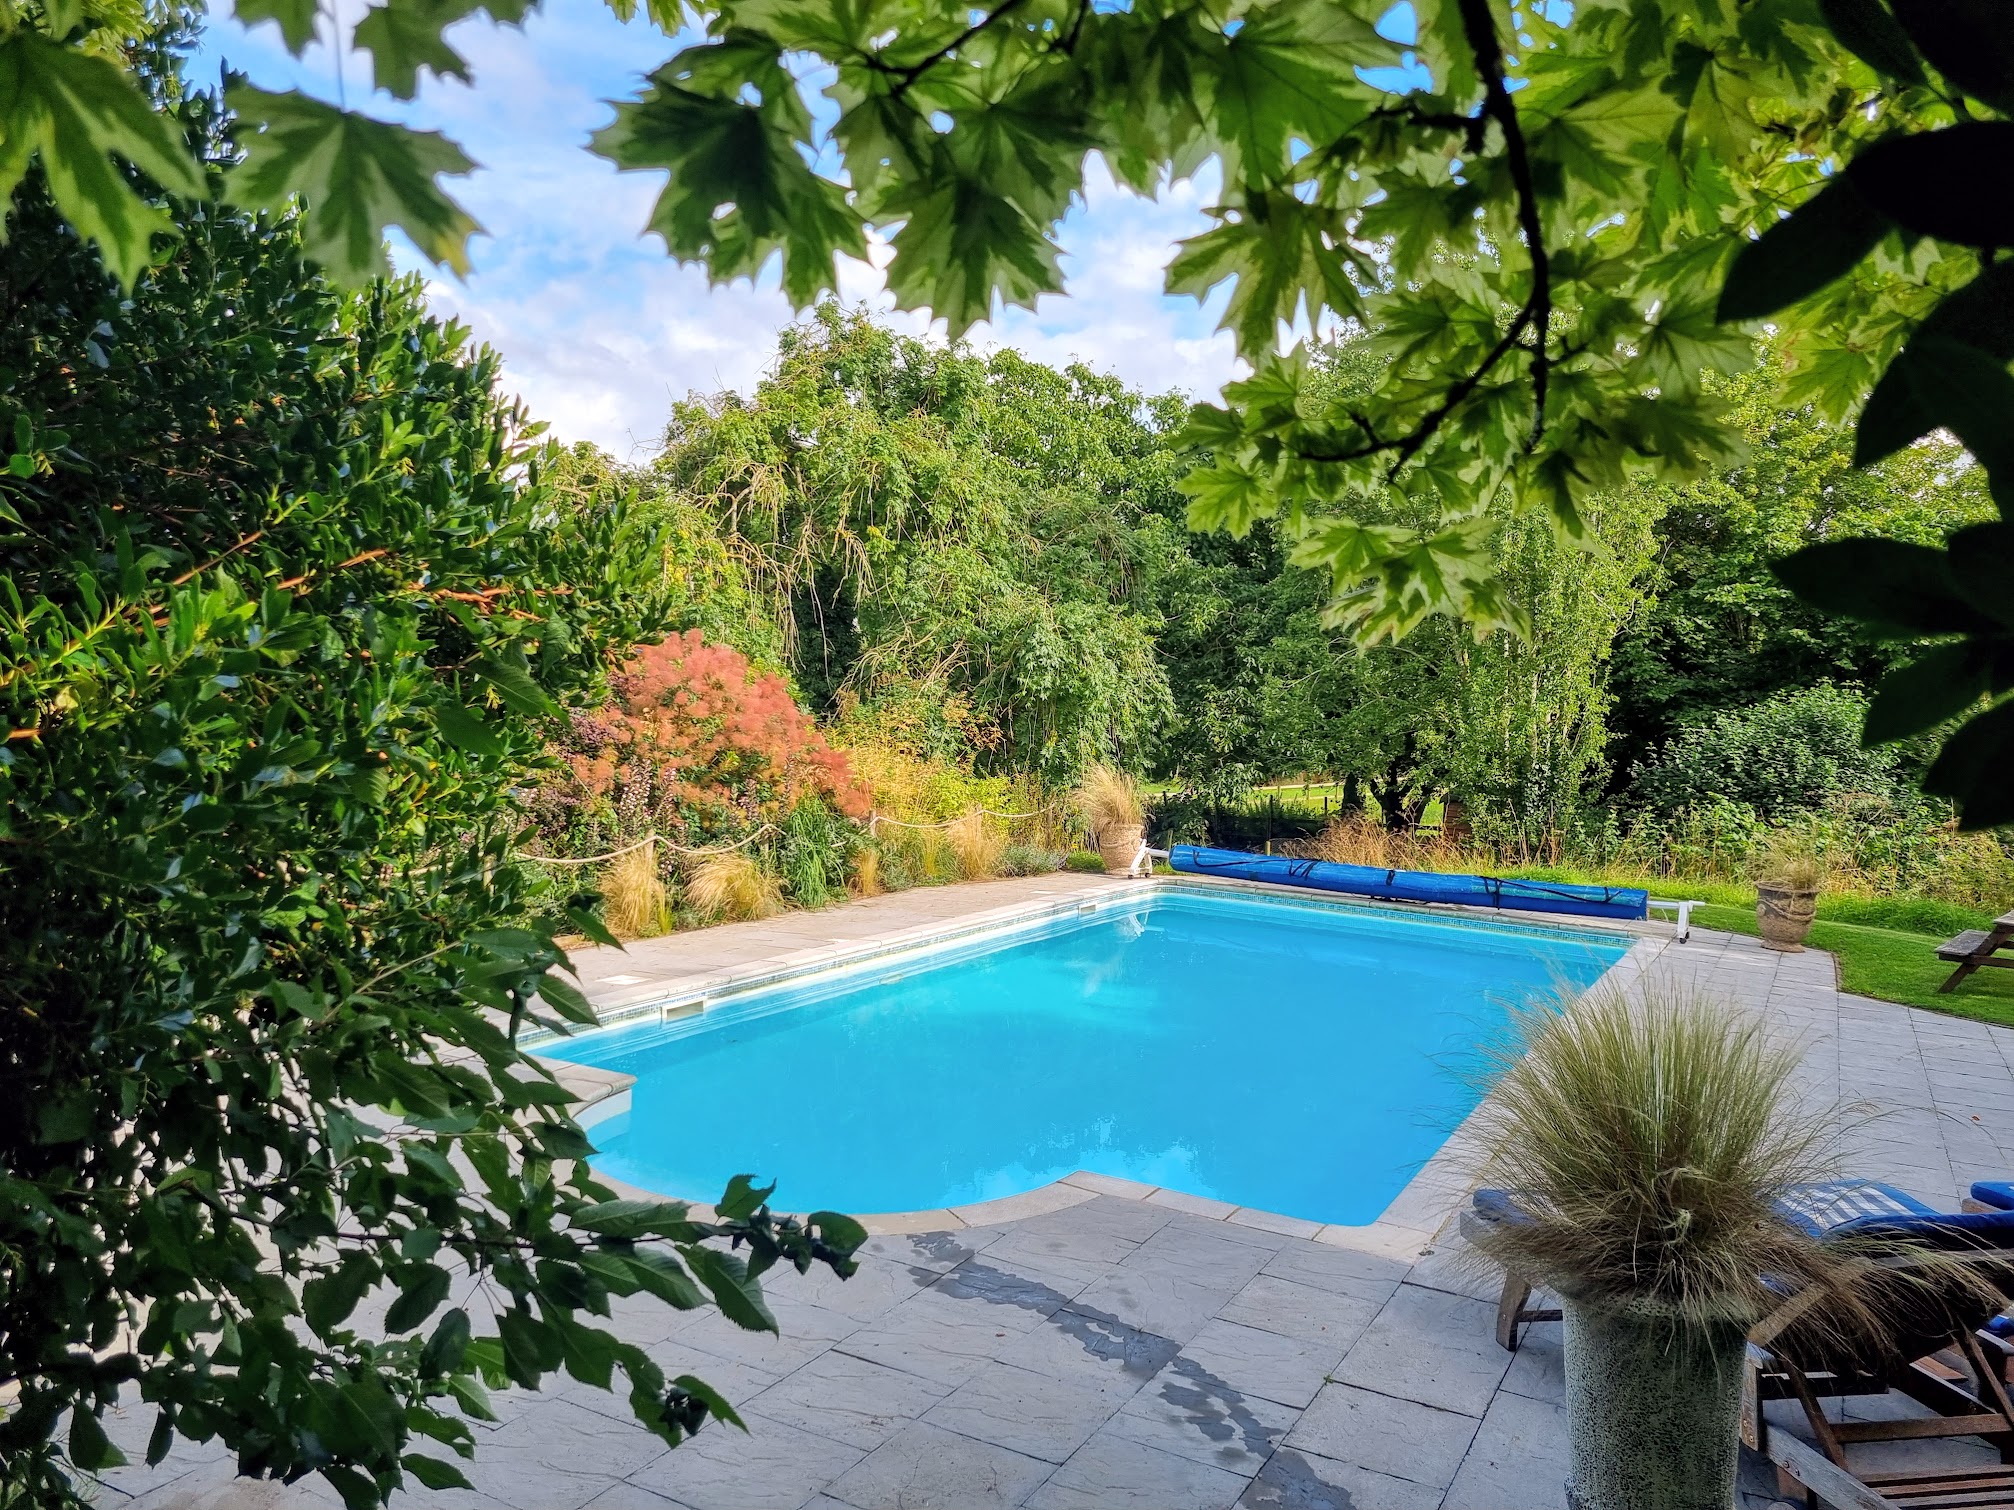 Hoppickers Rural Retreat - fabulous outdoor pool